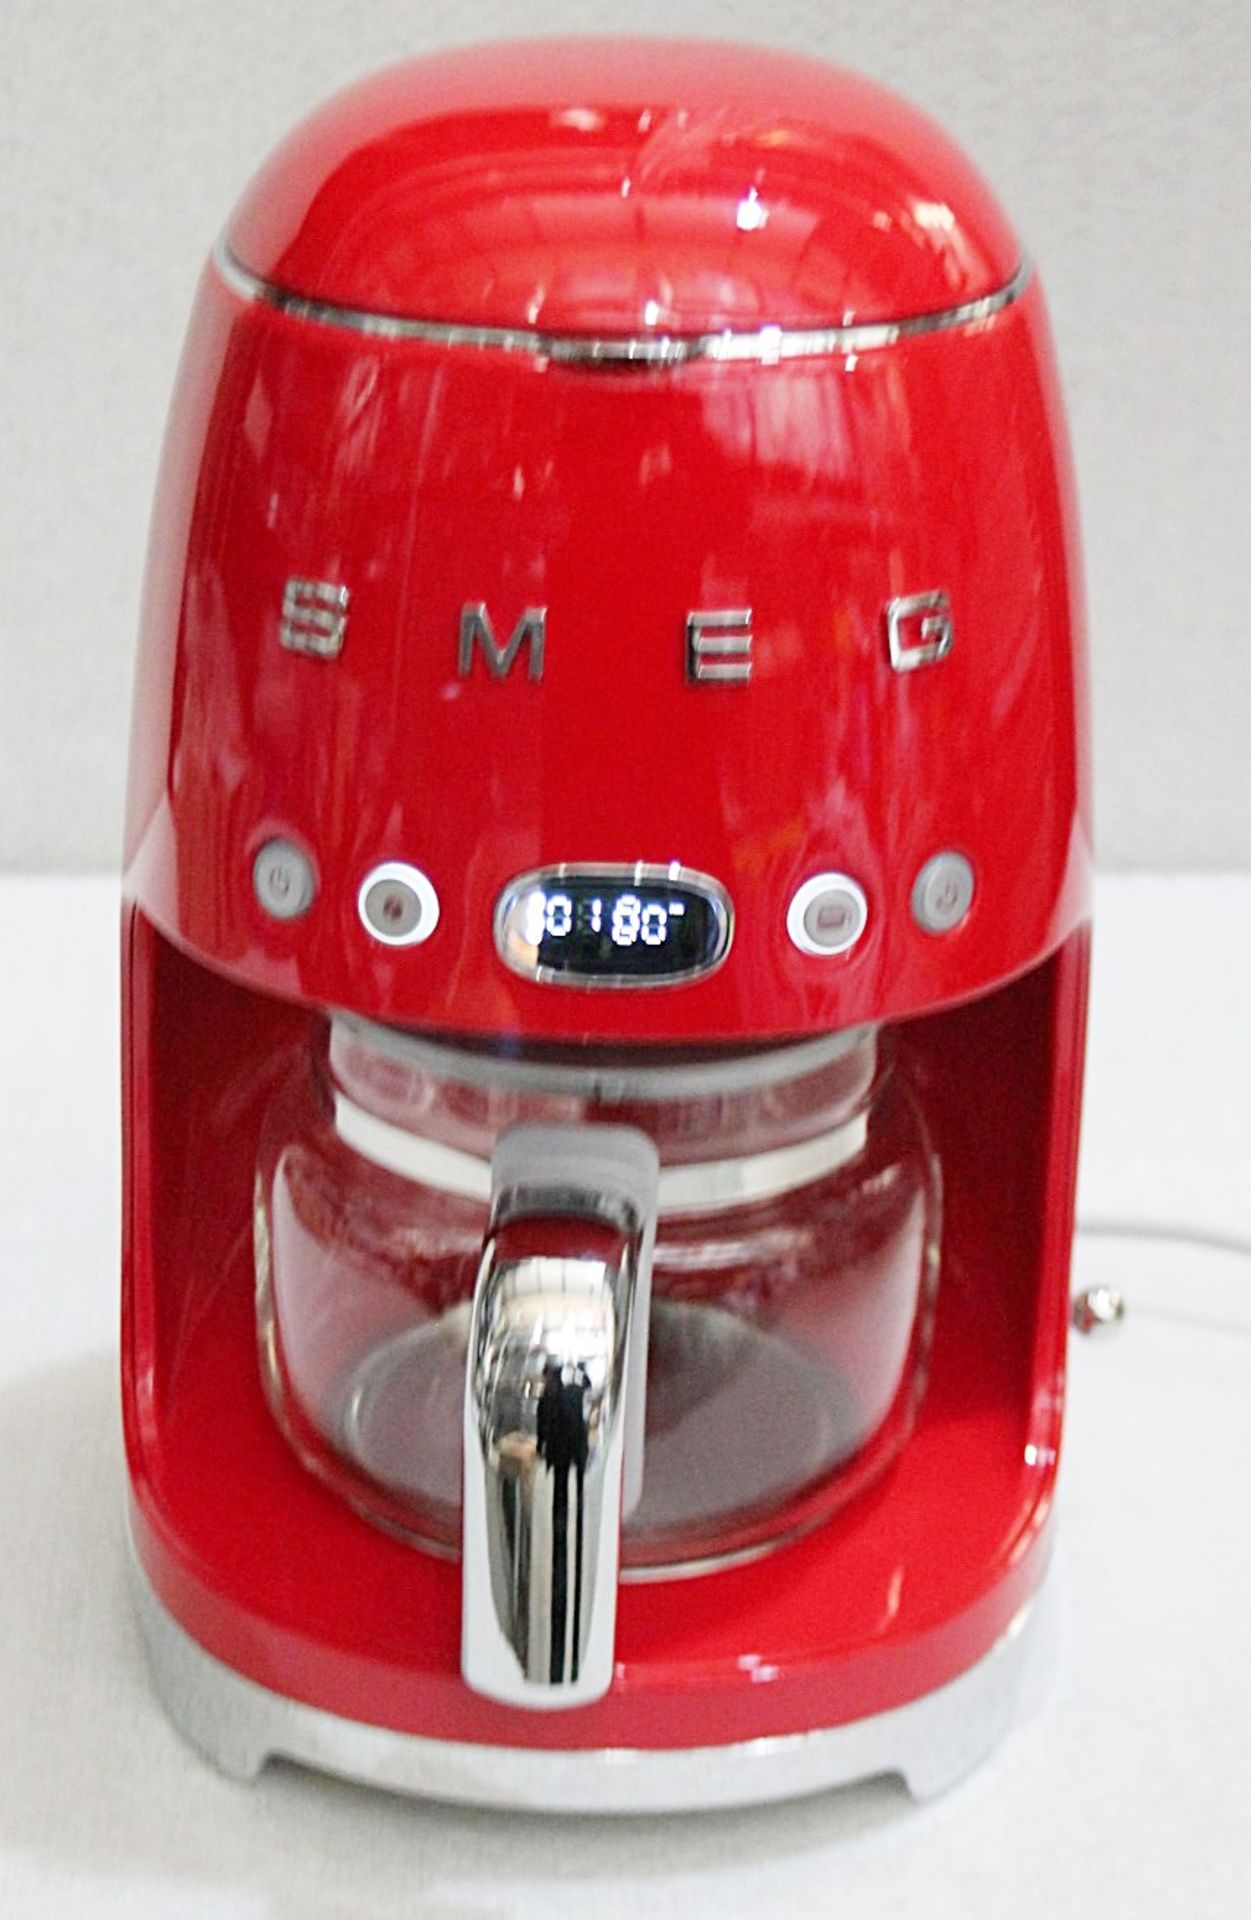 1 x SMEG 'Drip' Filter Coffee Machine In Red - Original Price £199.00 - Unused Boxed Stock - Image 2 of 14